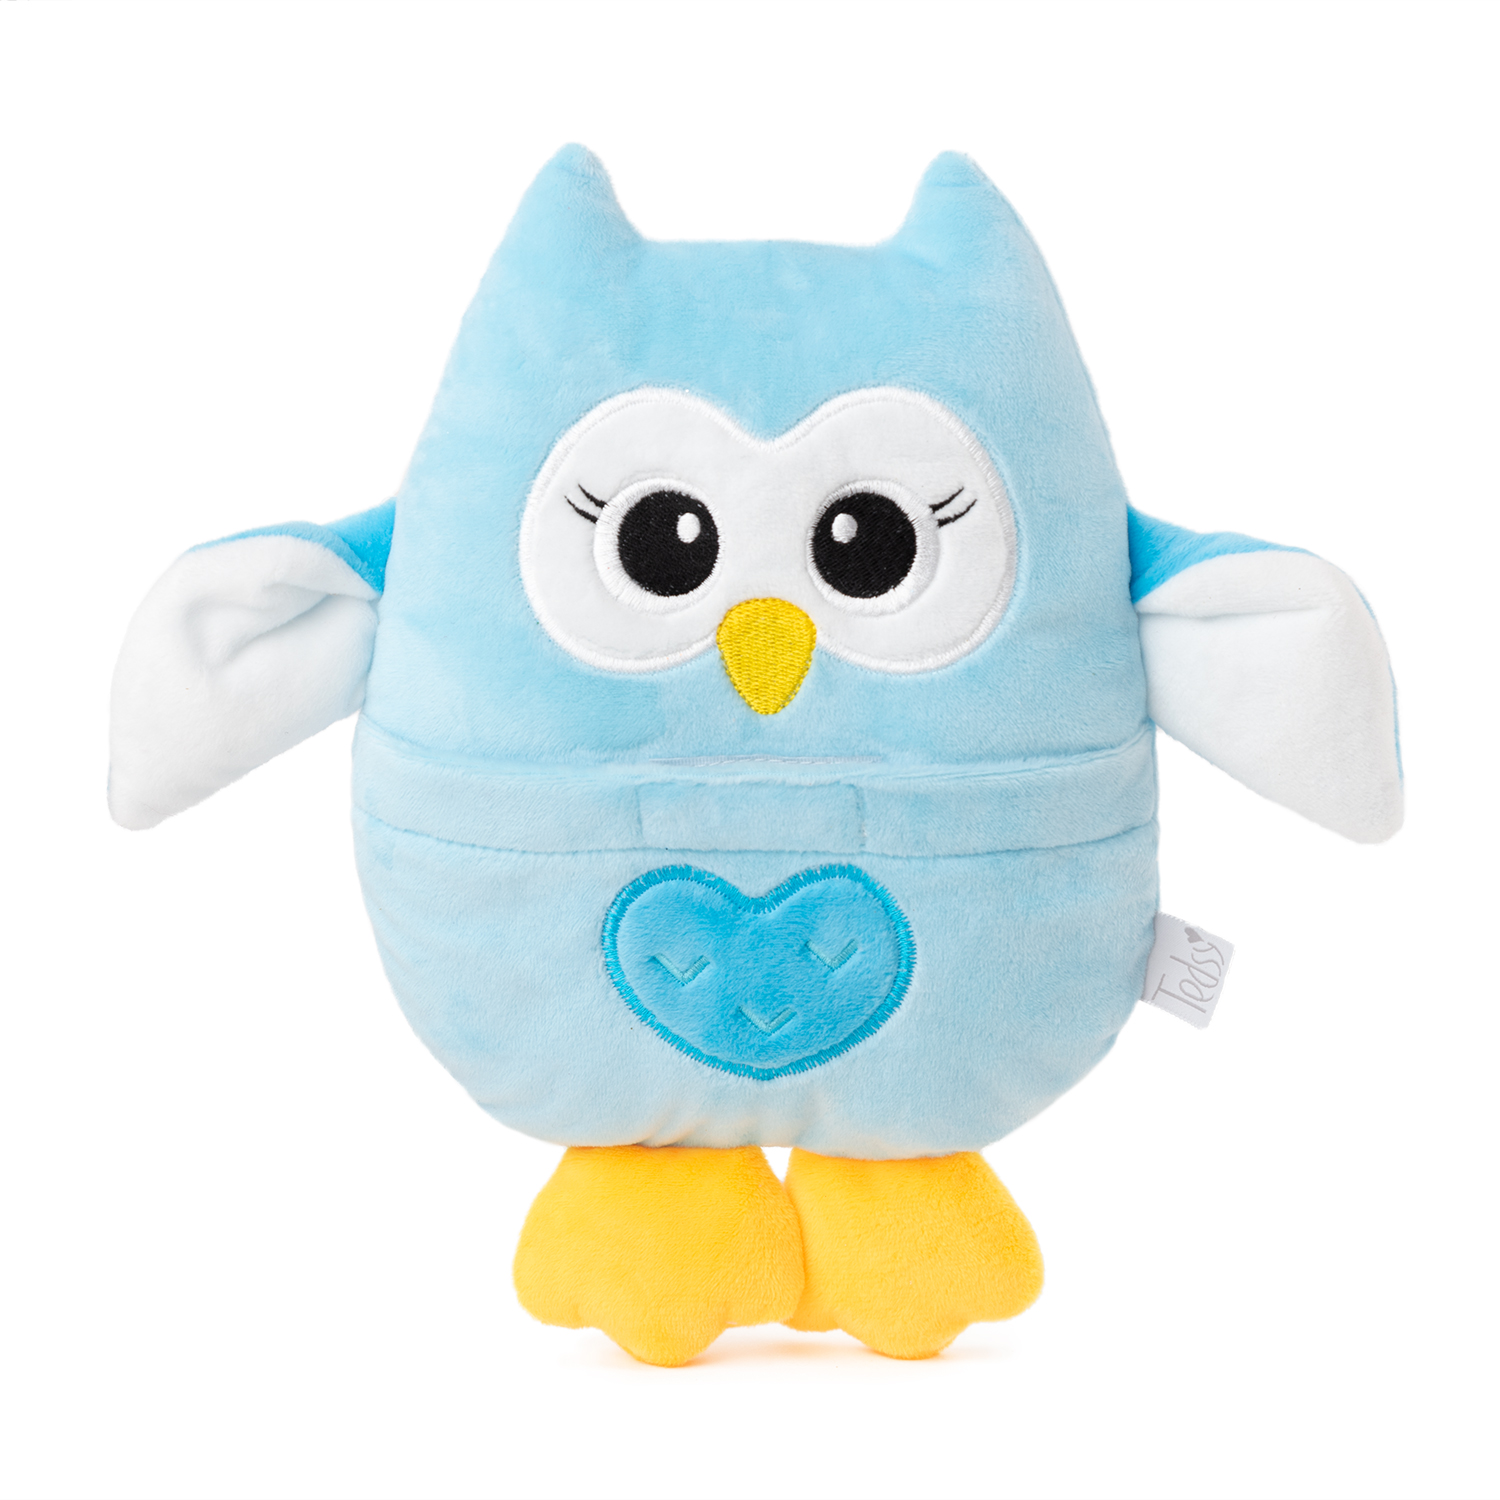 Toy Owl with Cherry Stones - Blue